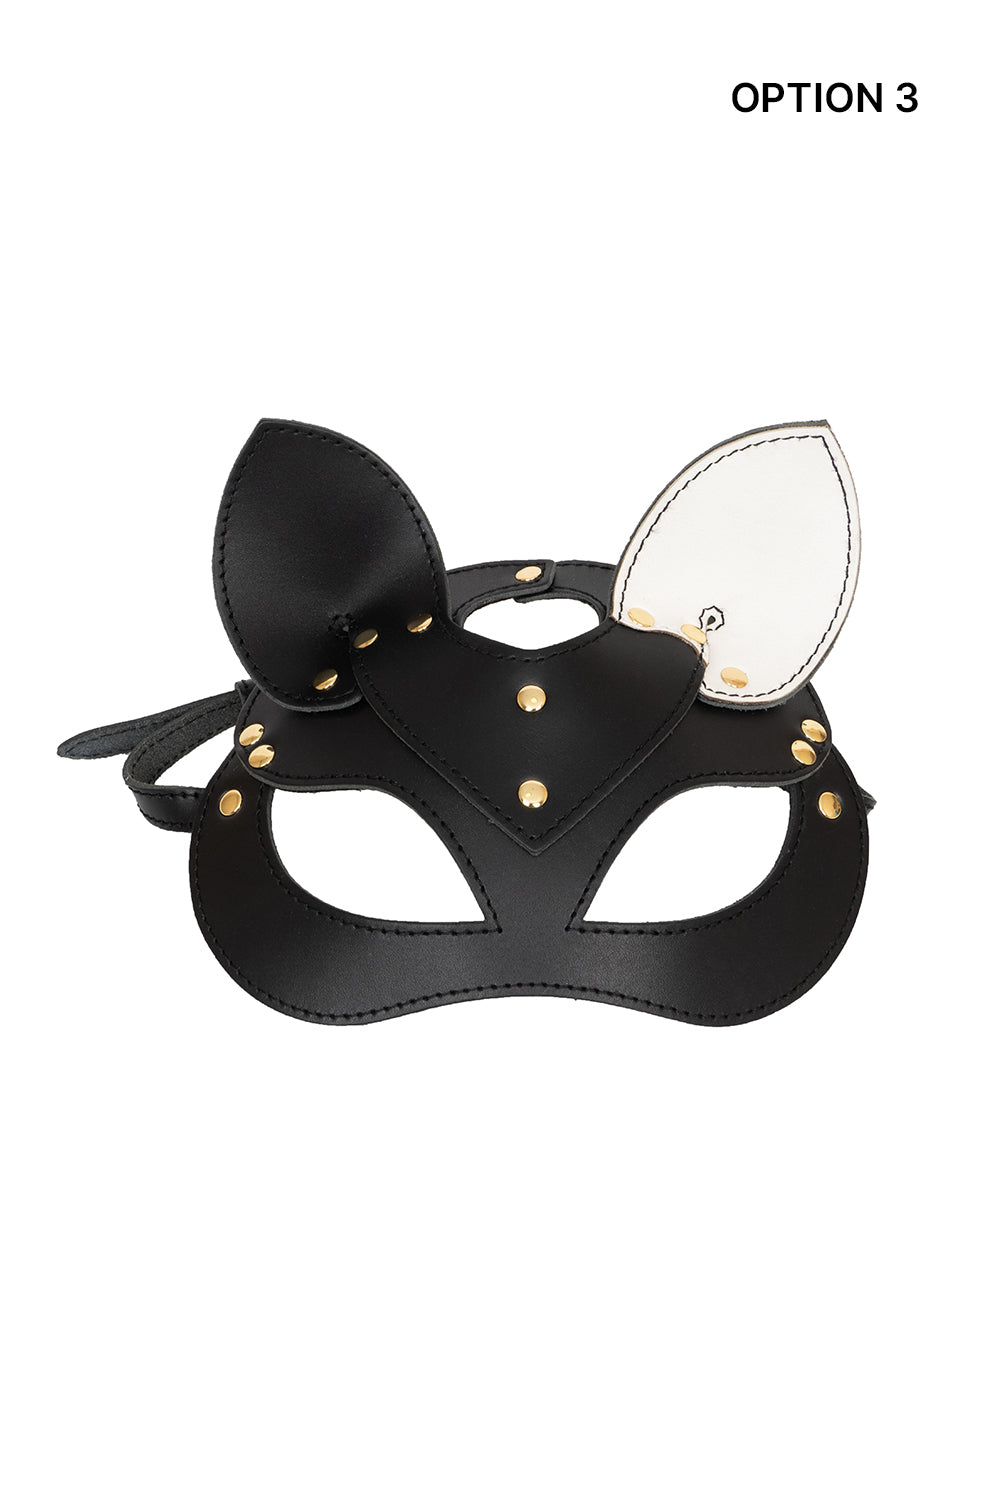 Leather сat mask, kitty fetish mask. Black and White mix